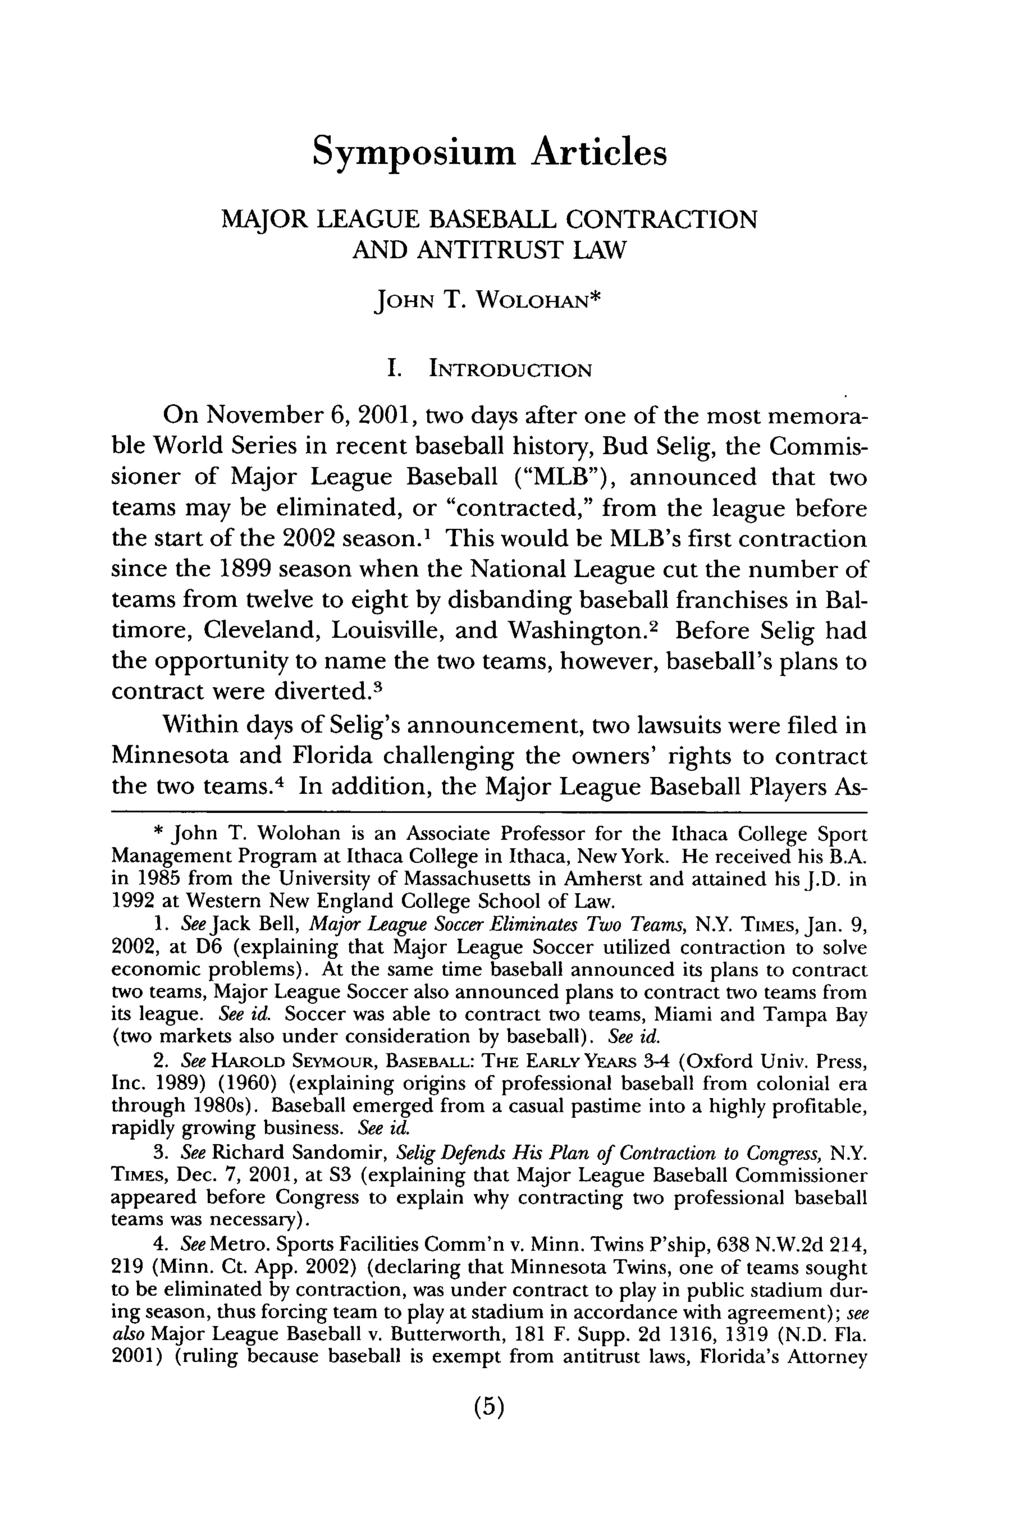 Wolohan: Major League Baseball Contraction and Antitrust Law Symposium Articles MAJOR LEAGUE BASEBALL CONTRACTION AND ANTITRUST LAW JOHN T. WOLOHAN* I.